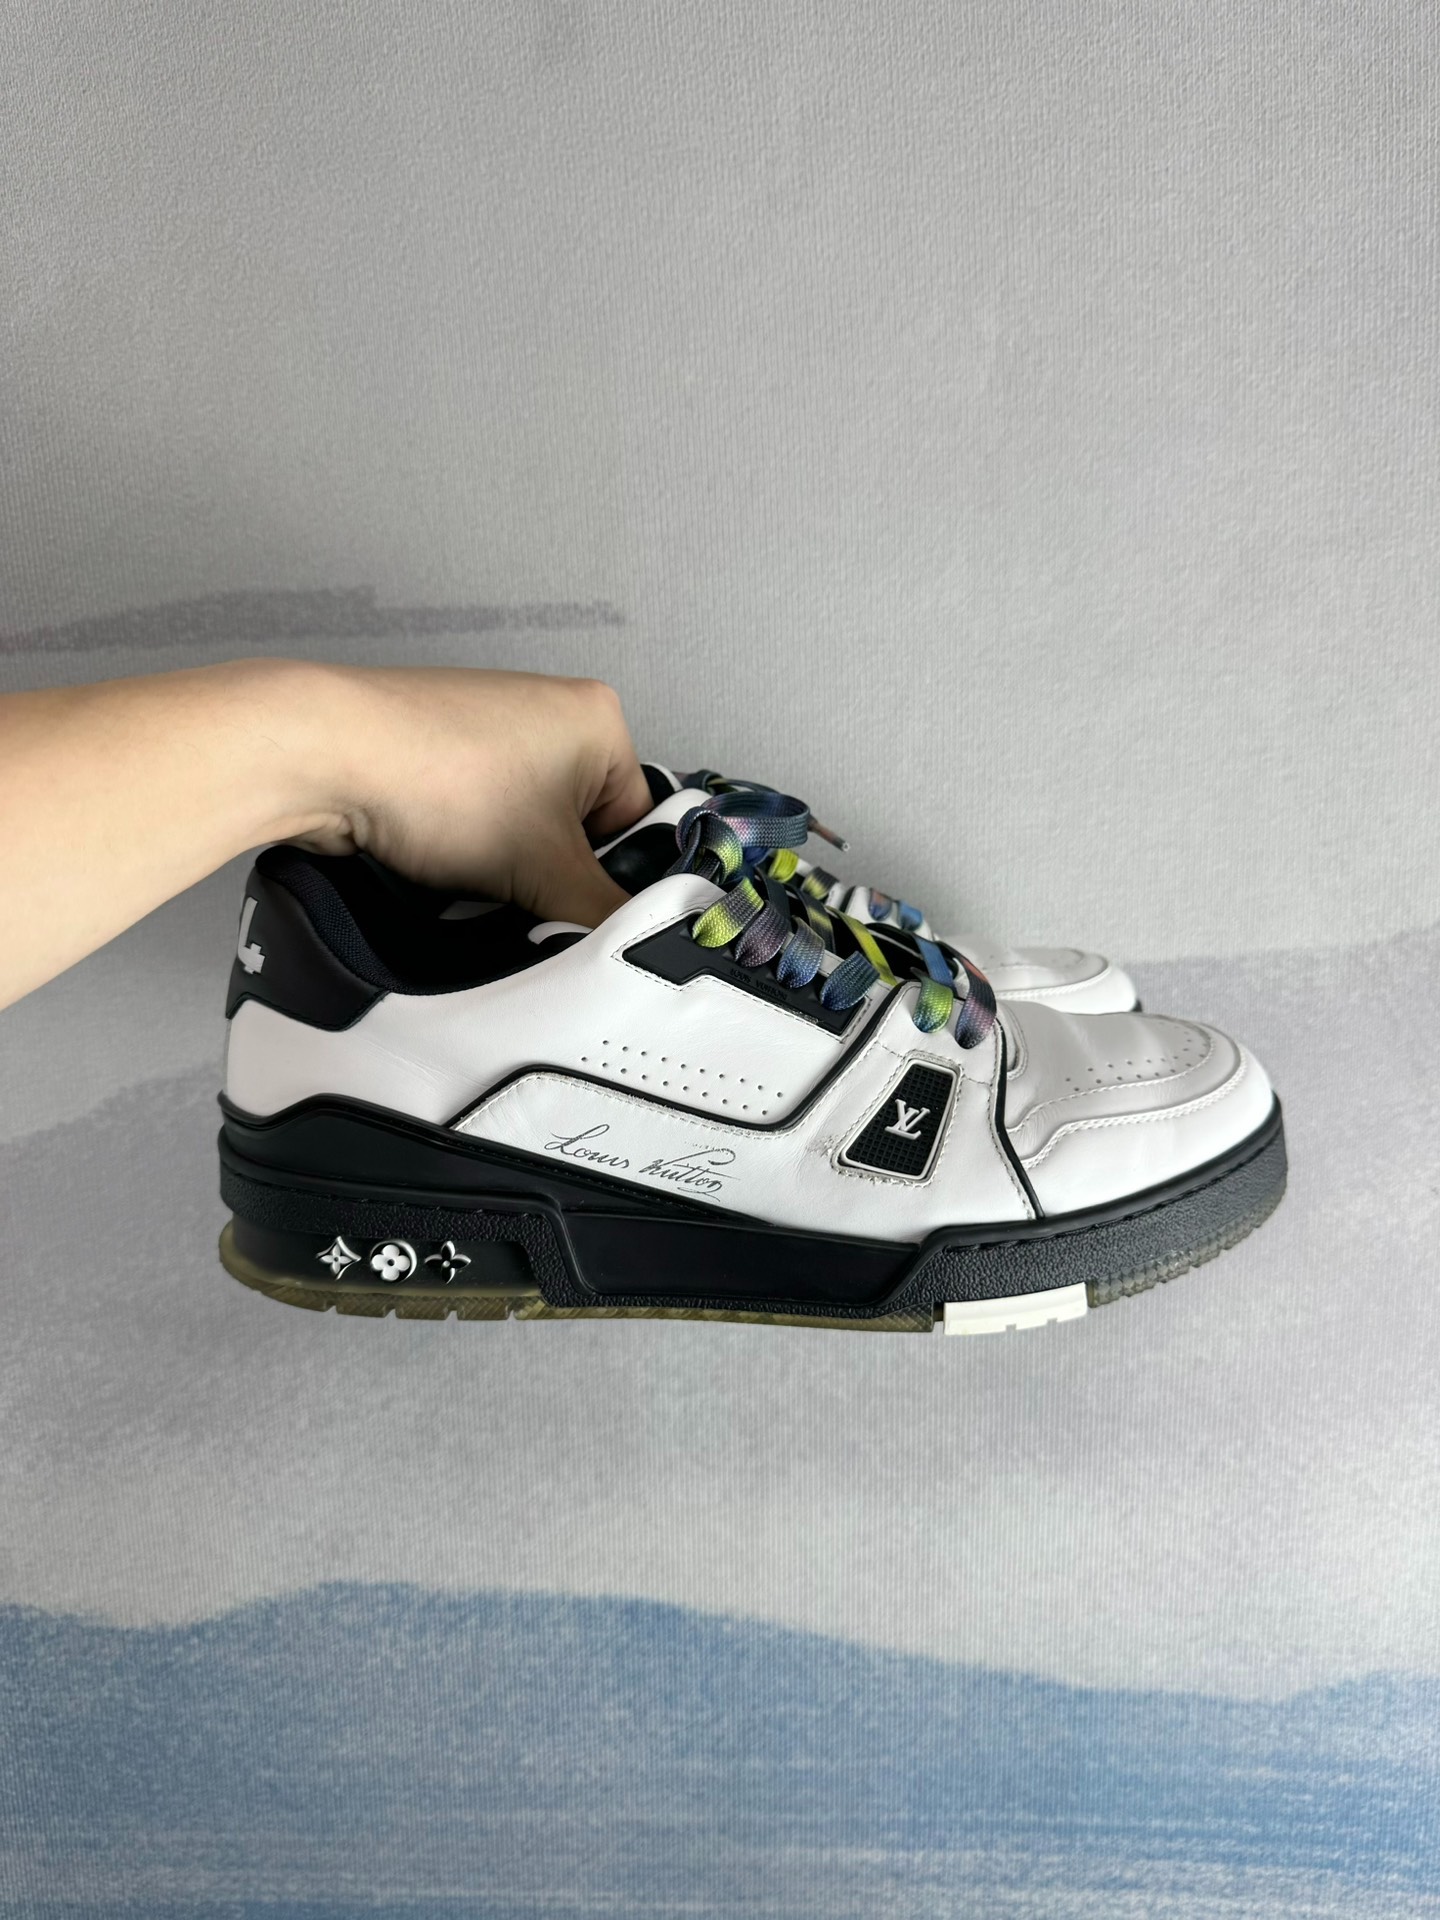 Louis Vuitton LV Trainer Black and White Panda Shoes - 2